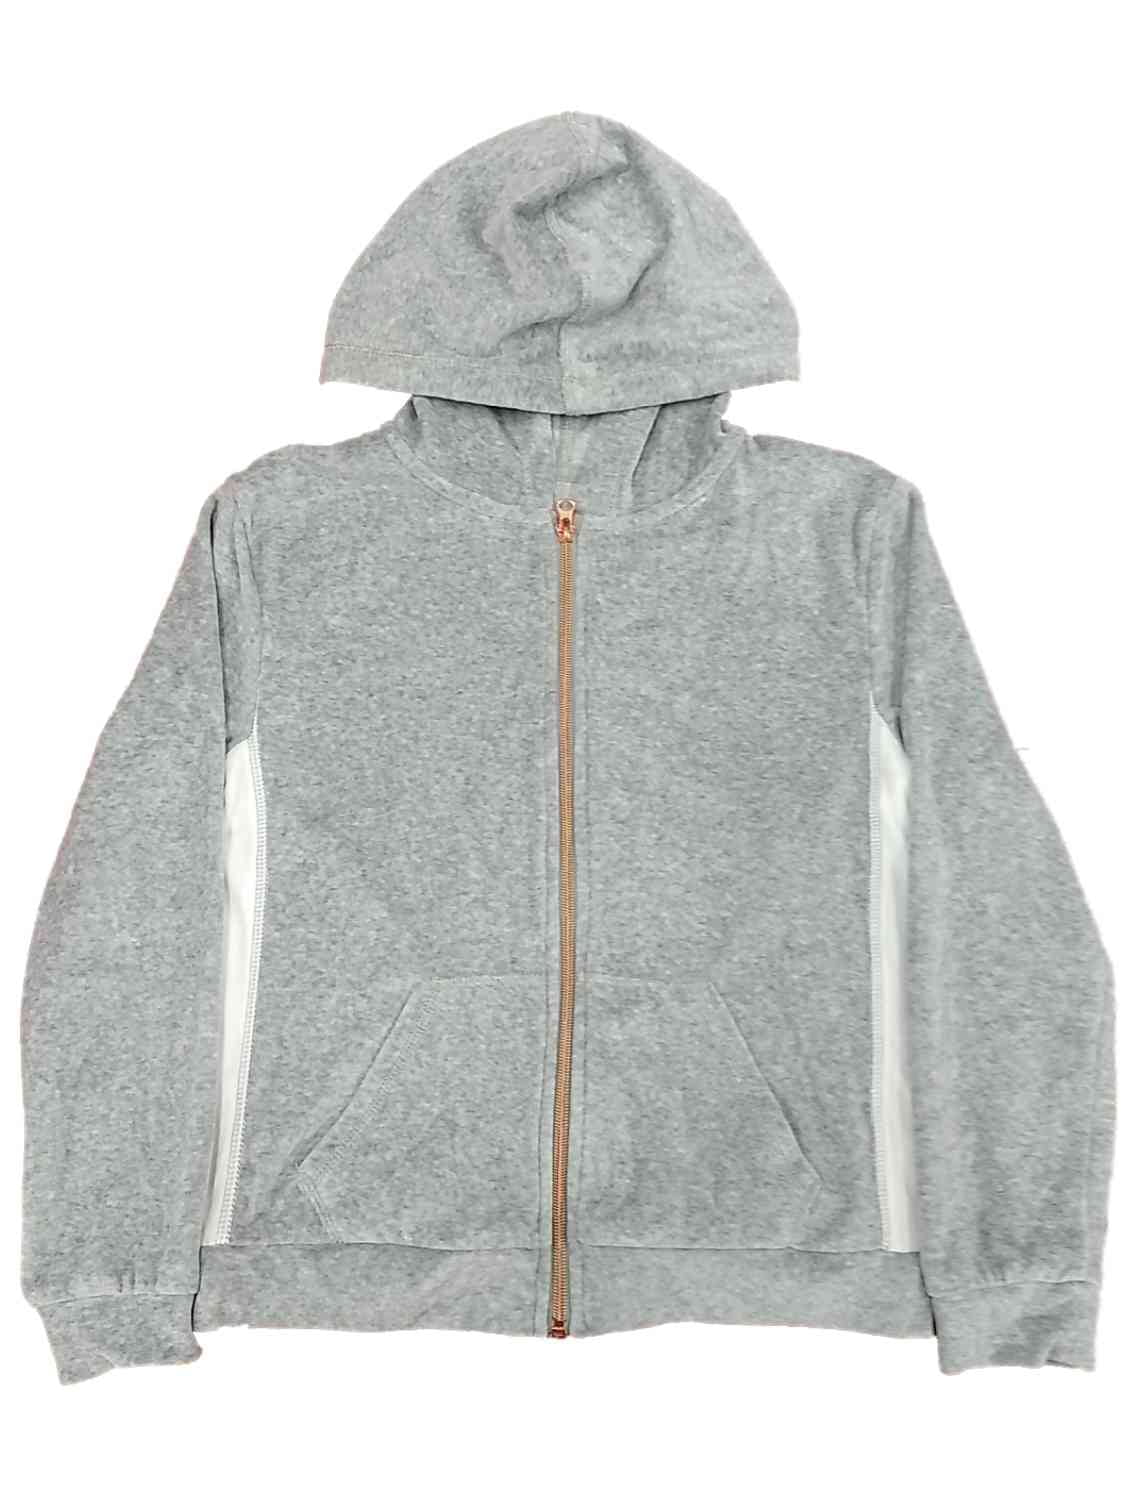 Xersion Girls 2-Tone Gray & White Zip Front Hoodie Sweatshirt Jacket XL ...